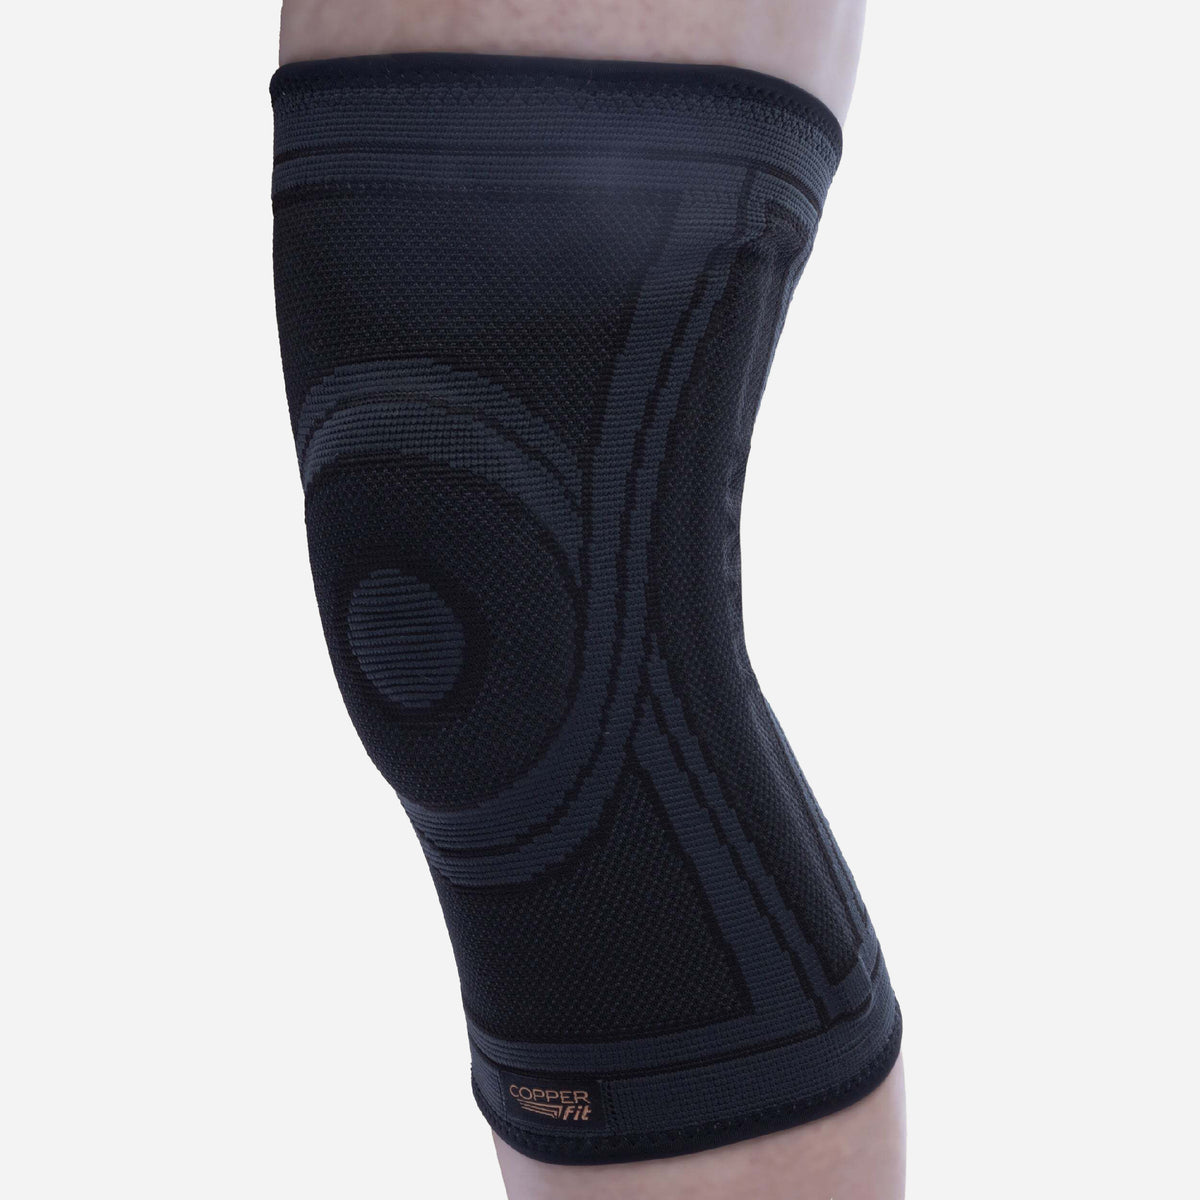 Copper Fit Rapid Relief Knee Wrap - Black : Target